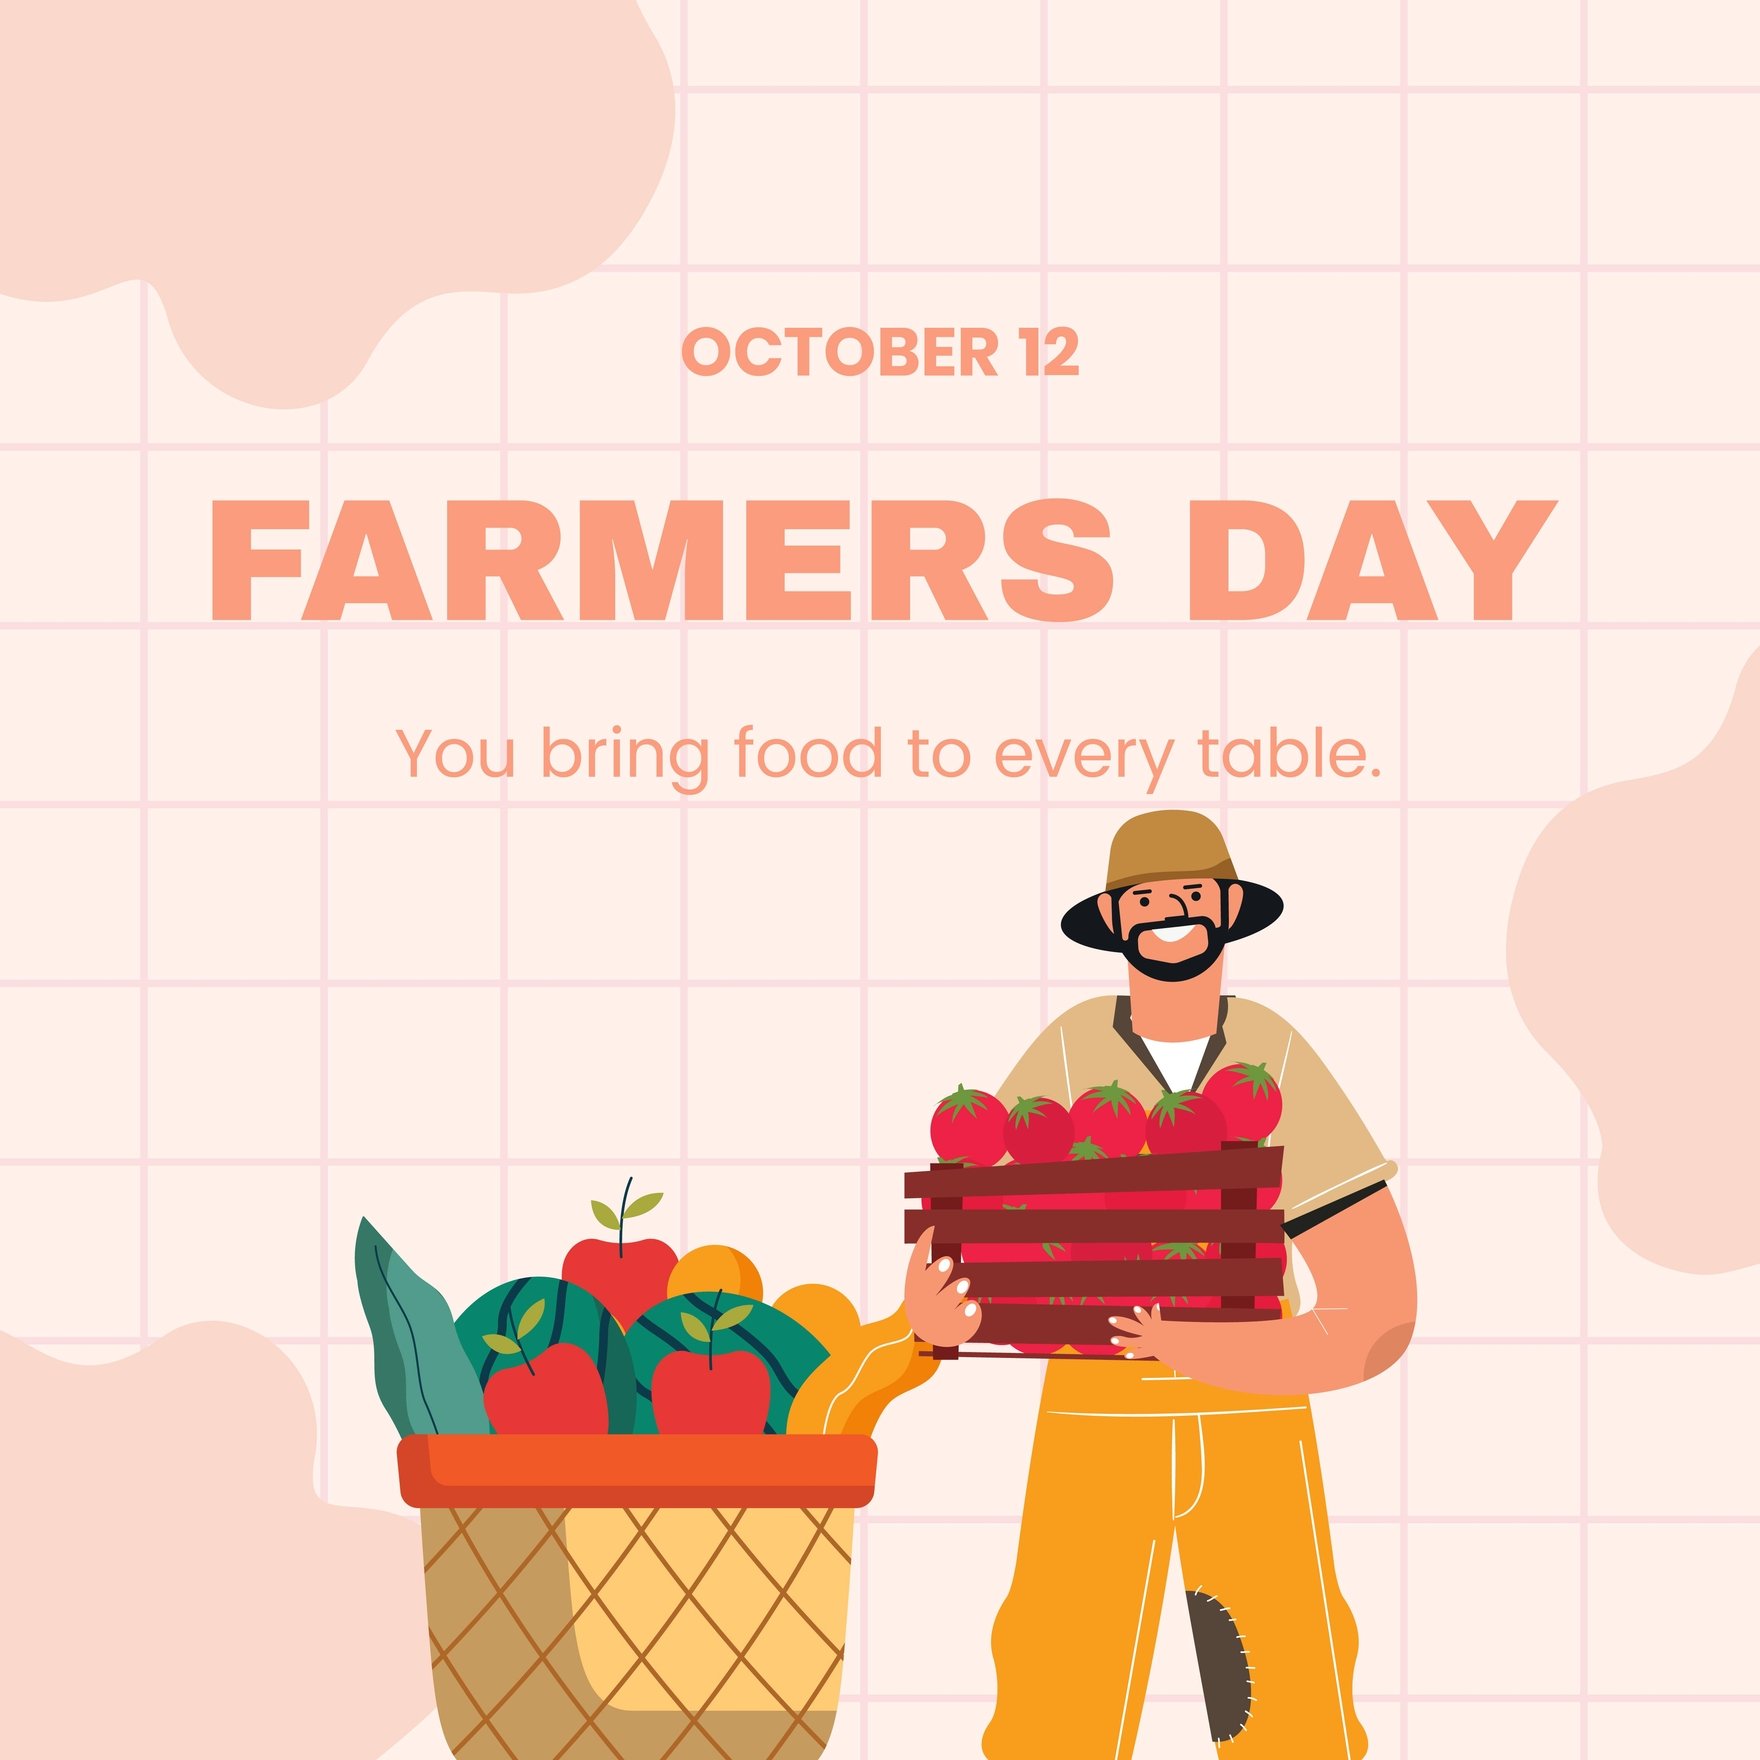 Free Farmers Day Instagram Post in Illustrator, PSD, EPS, SVG, JPG, PNG